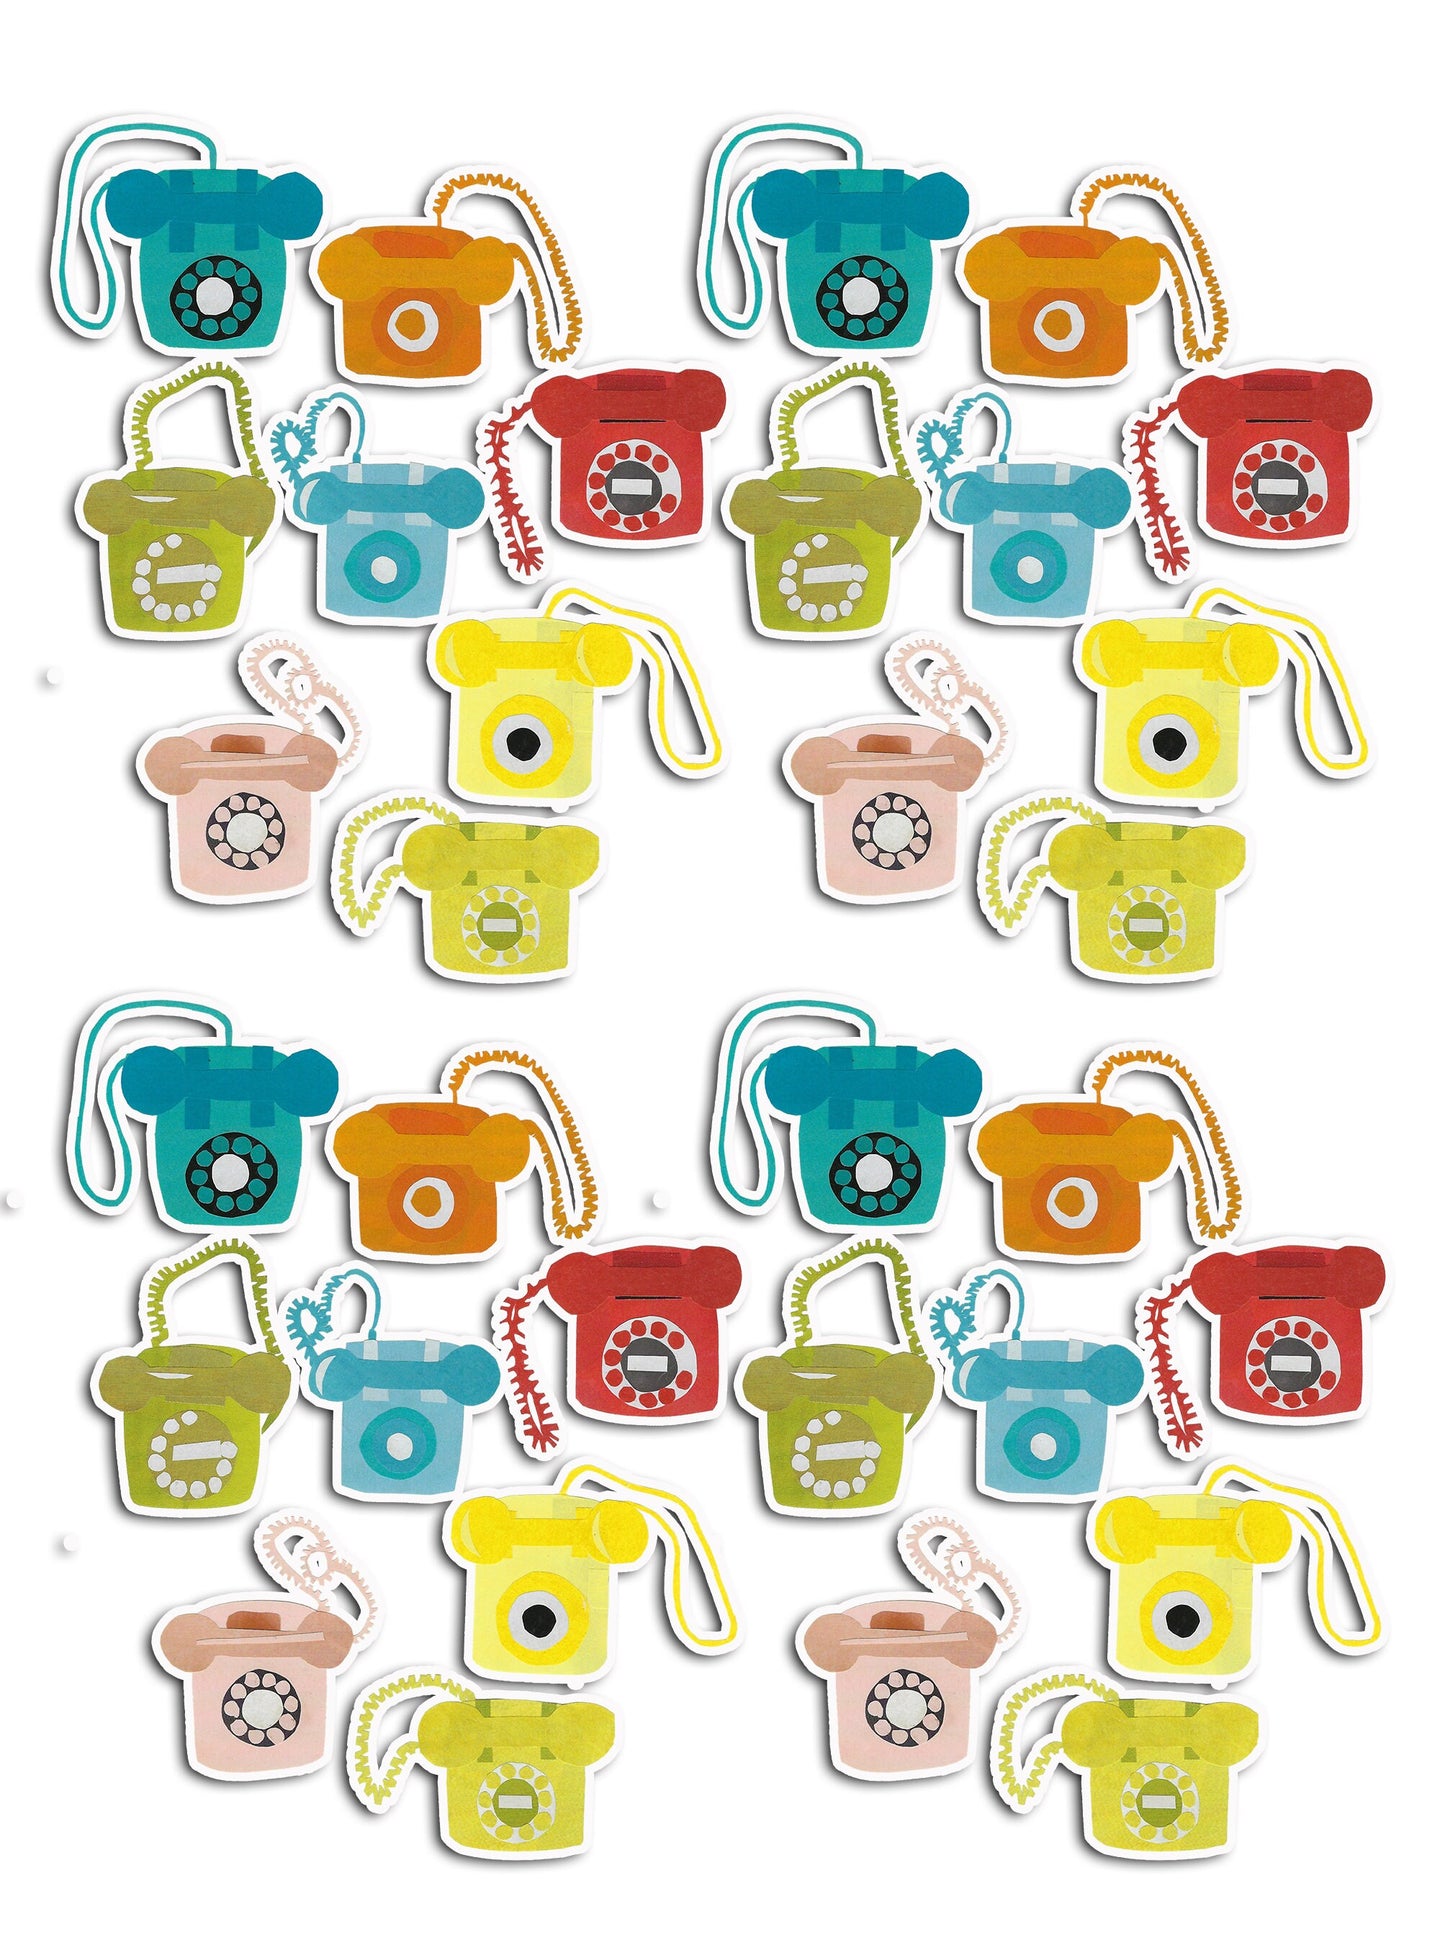 Rotary Phones collage Sticker Set